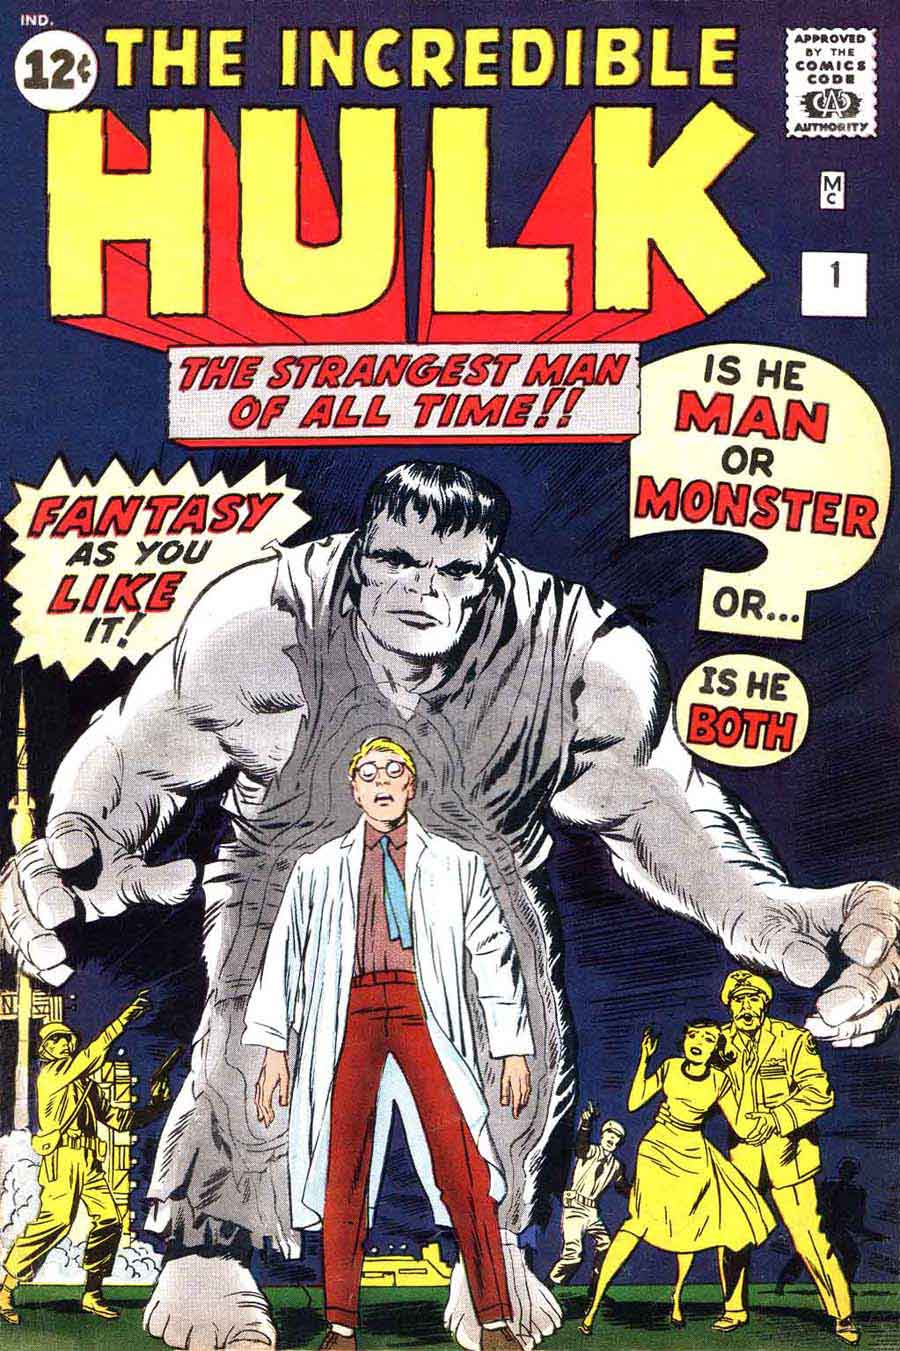 Incredible Hulk v1 #1 marvel comic book cover art by Jack Kirby